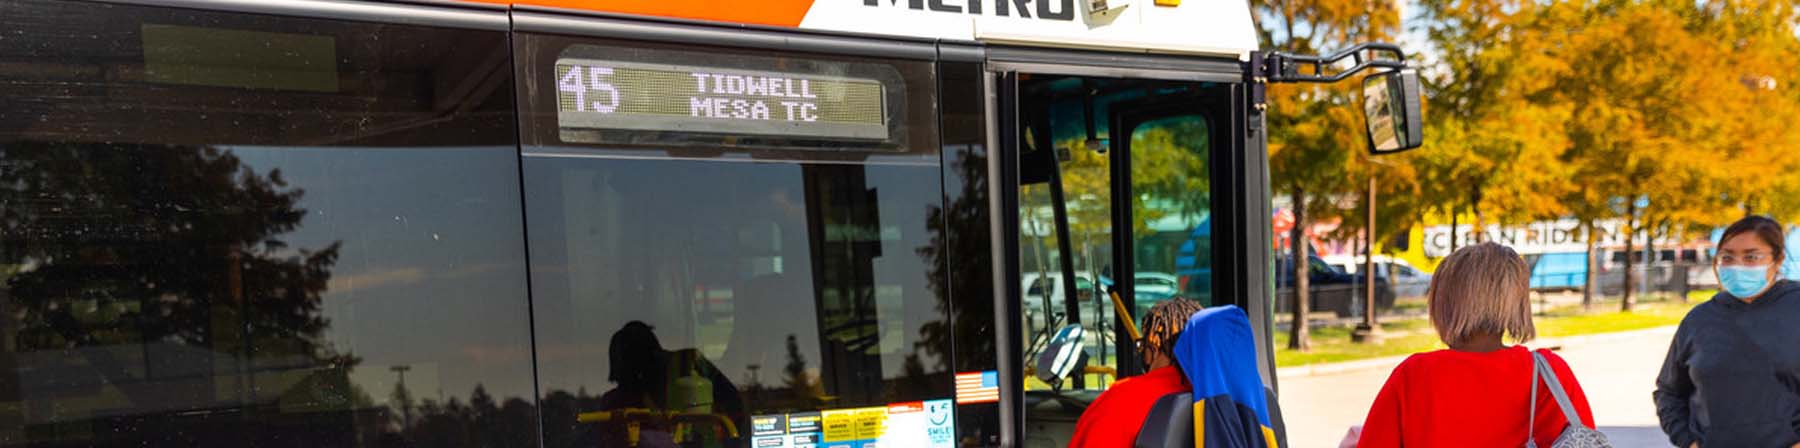 45 Tidwell customers boarding bus.